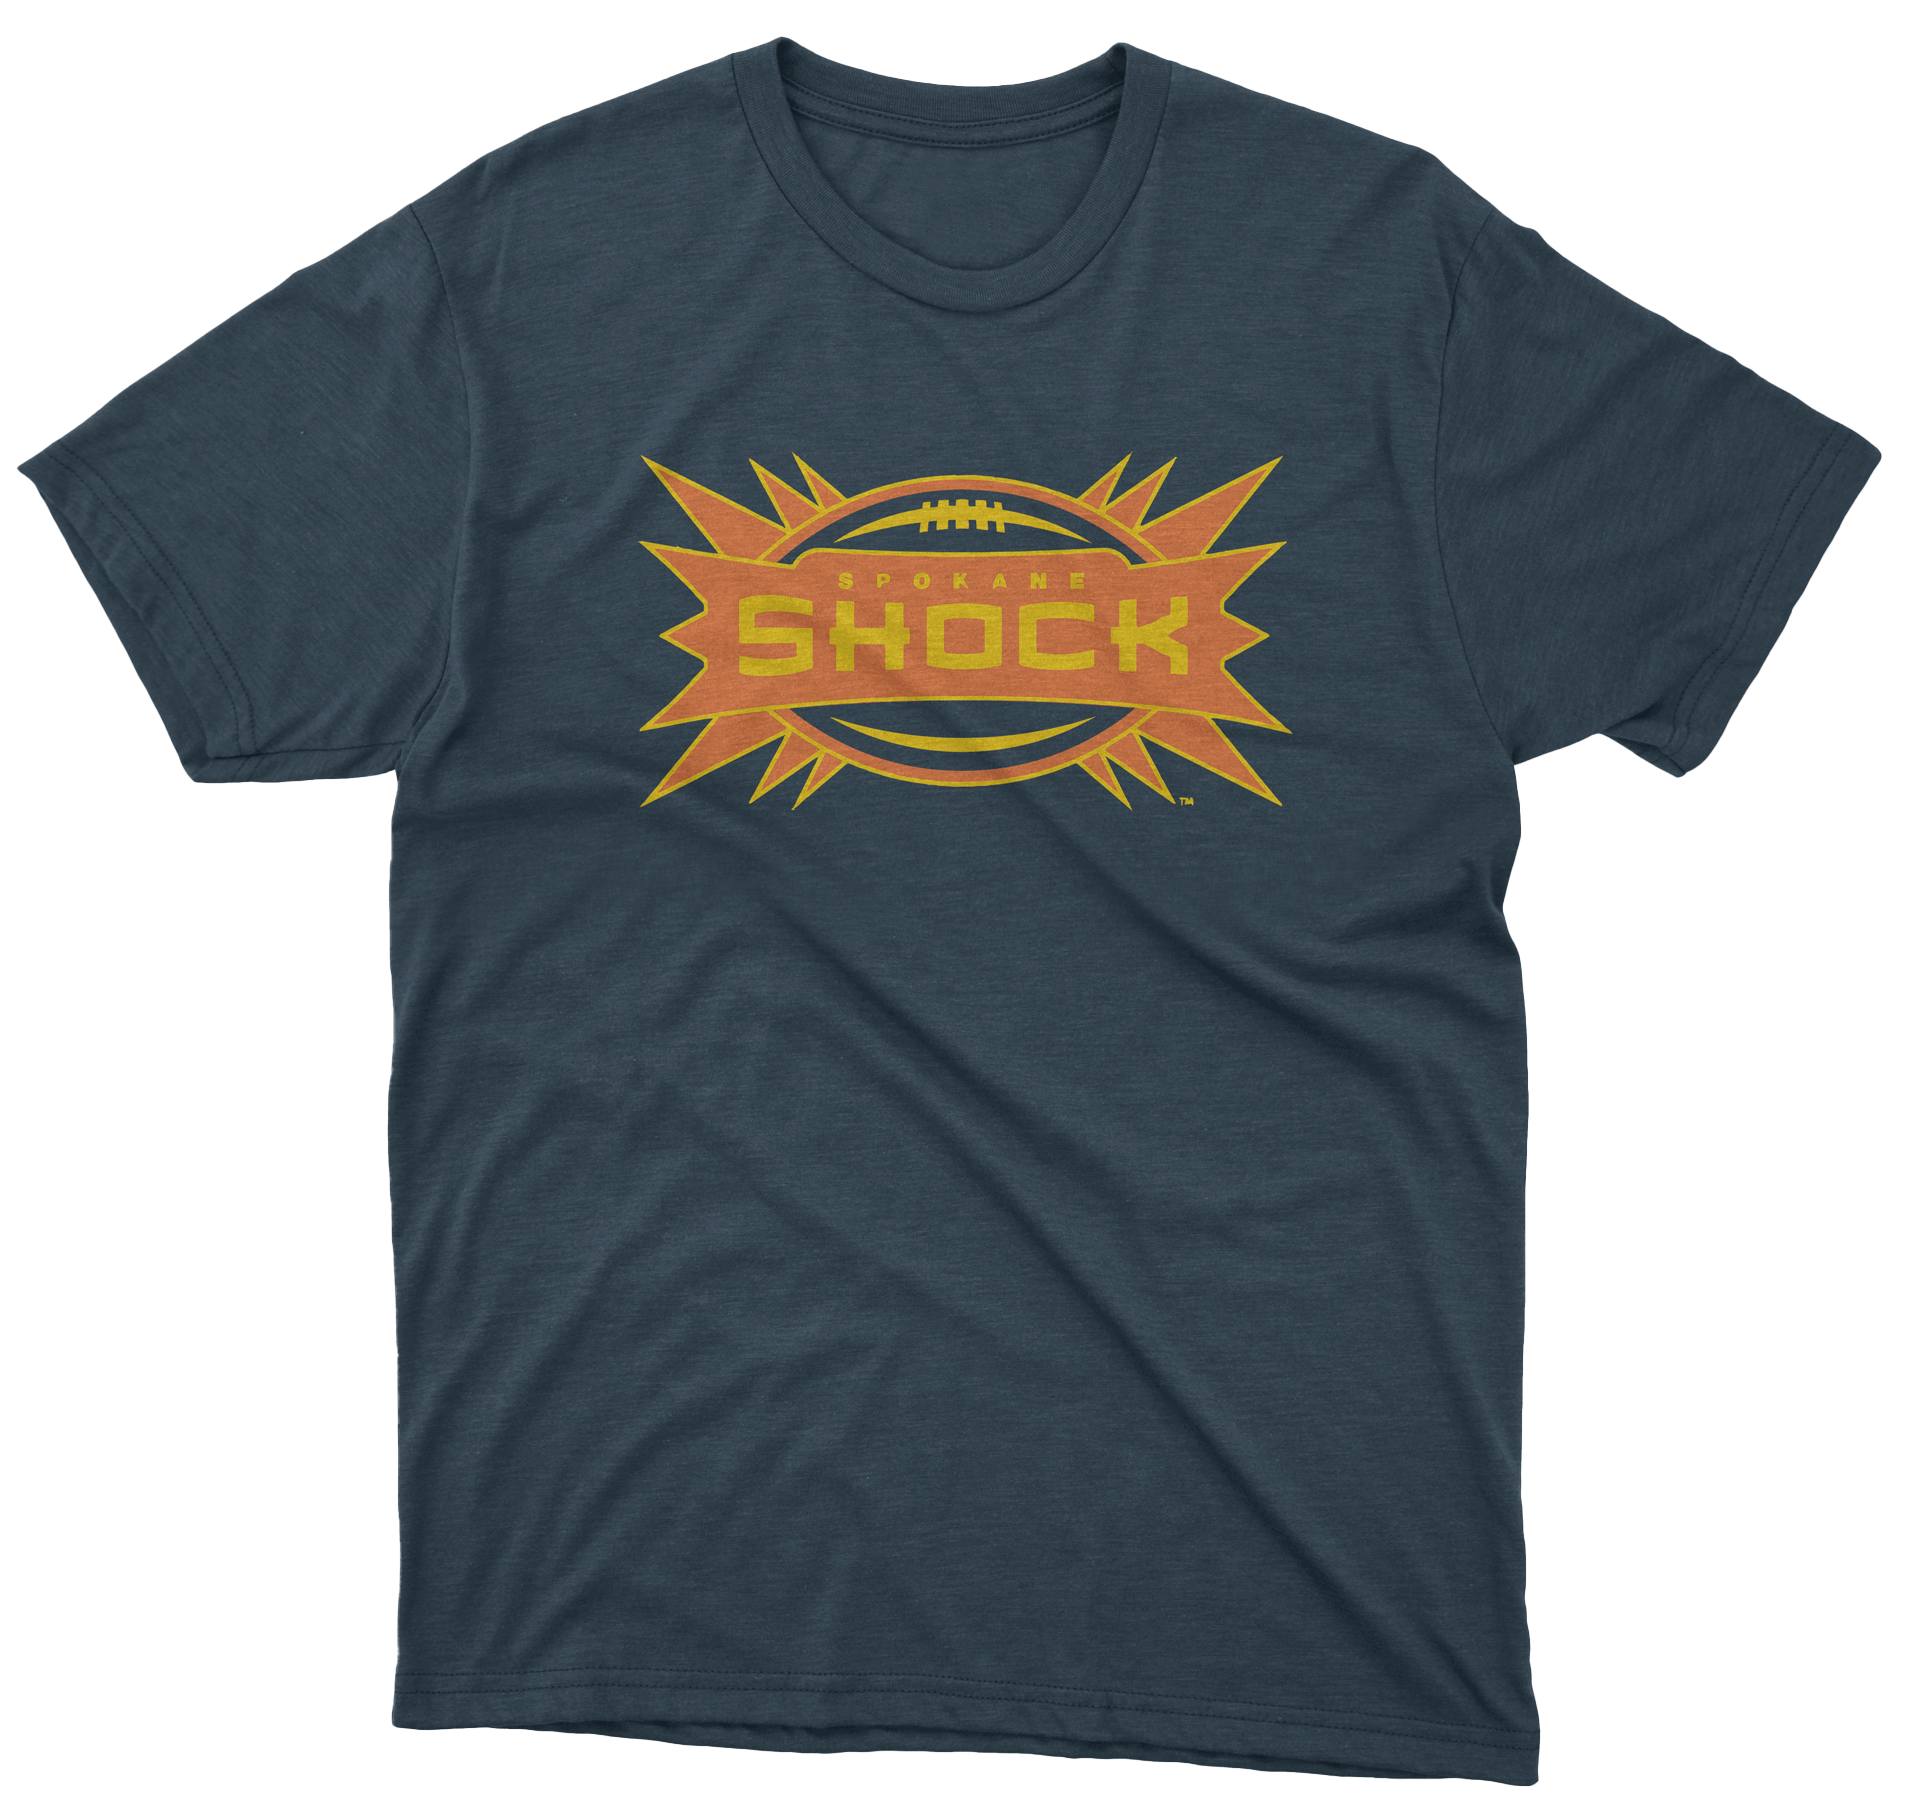 Spokane Shock T-shirt navy